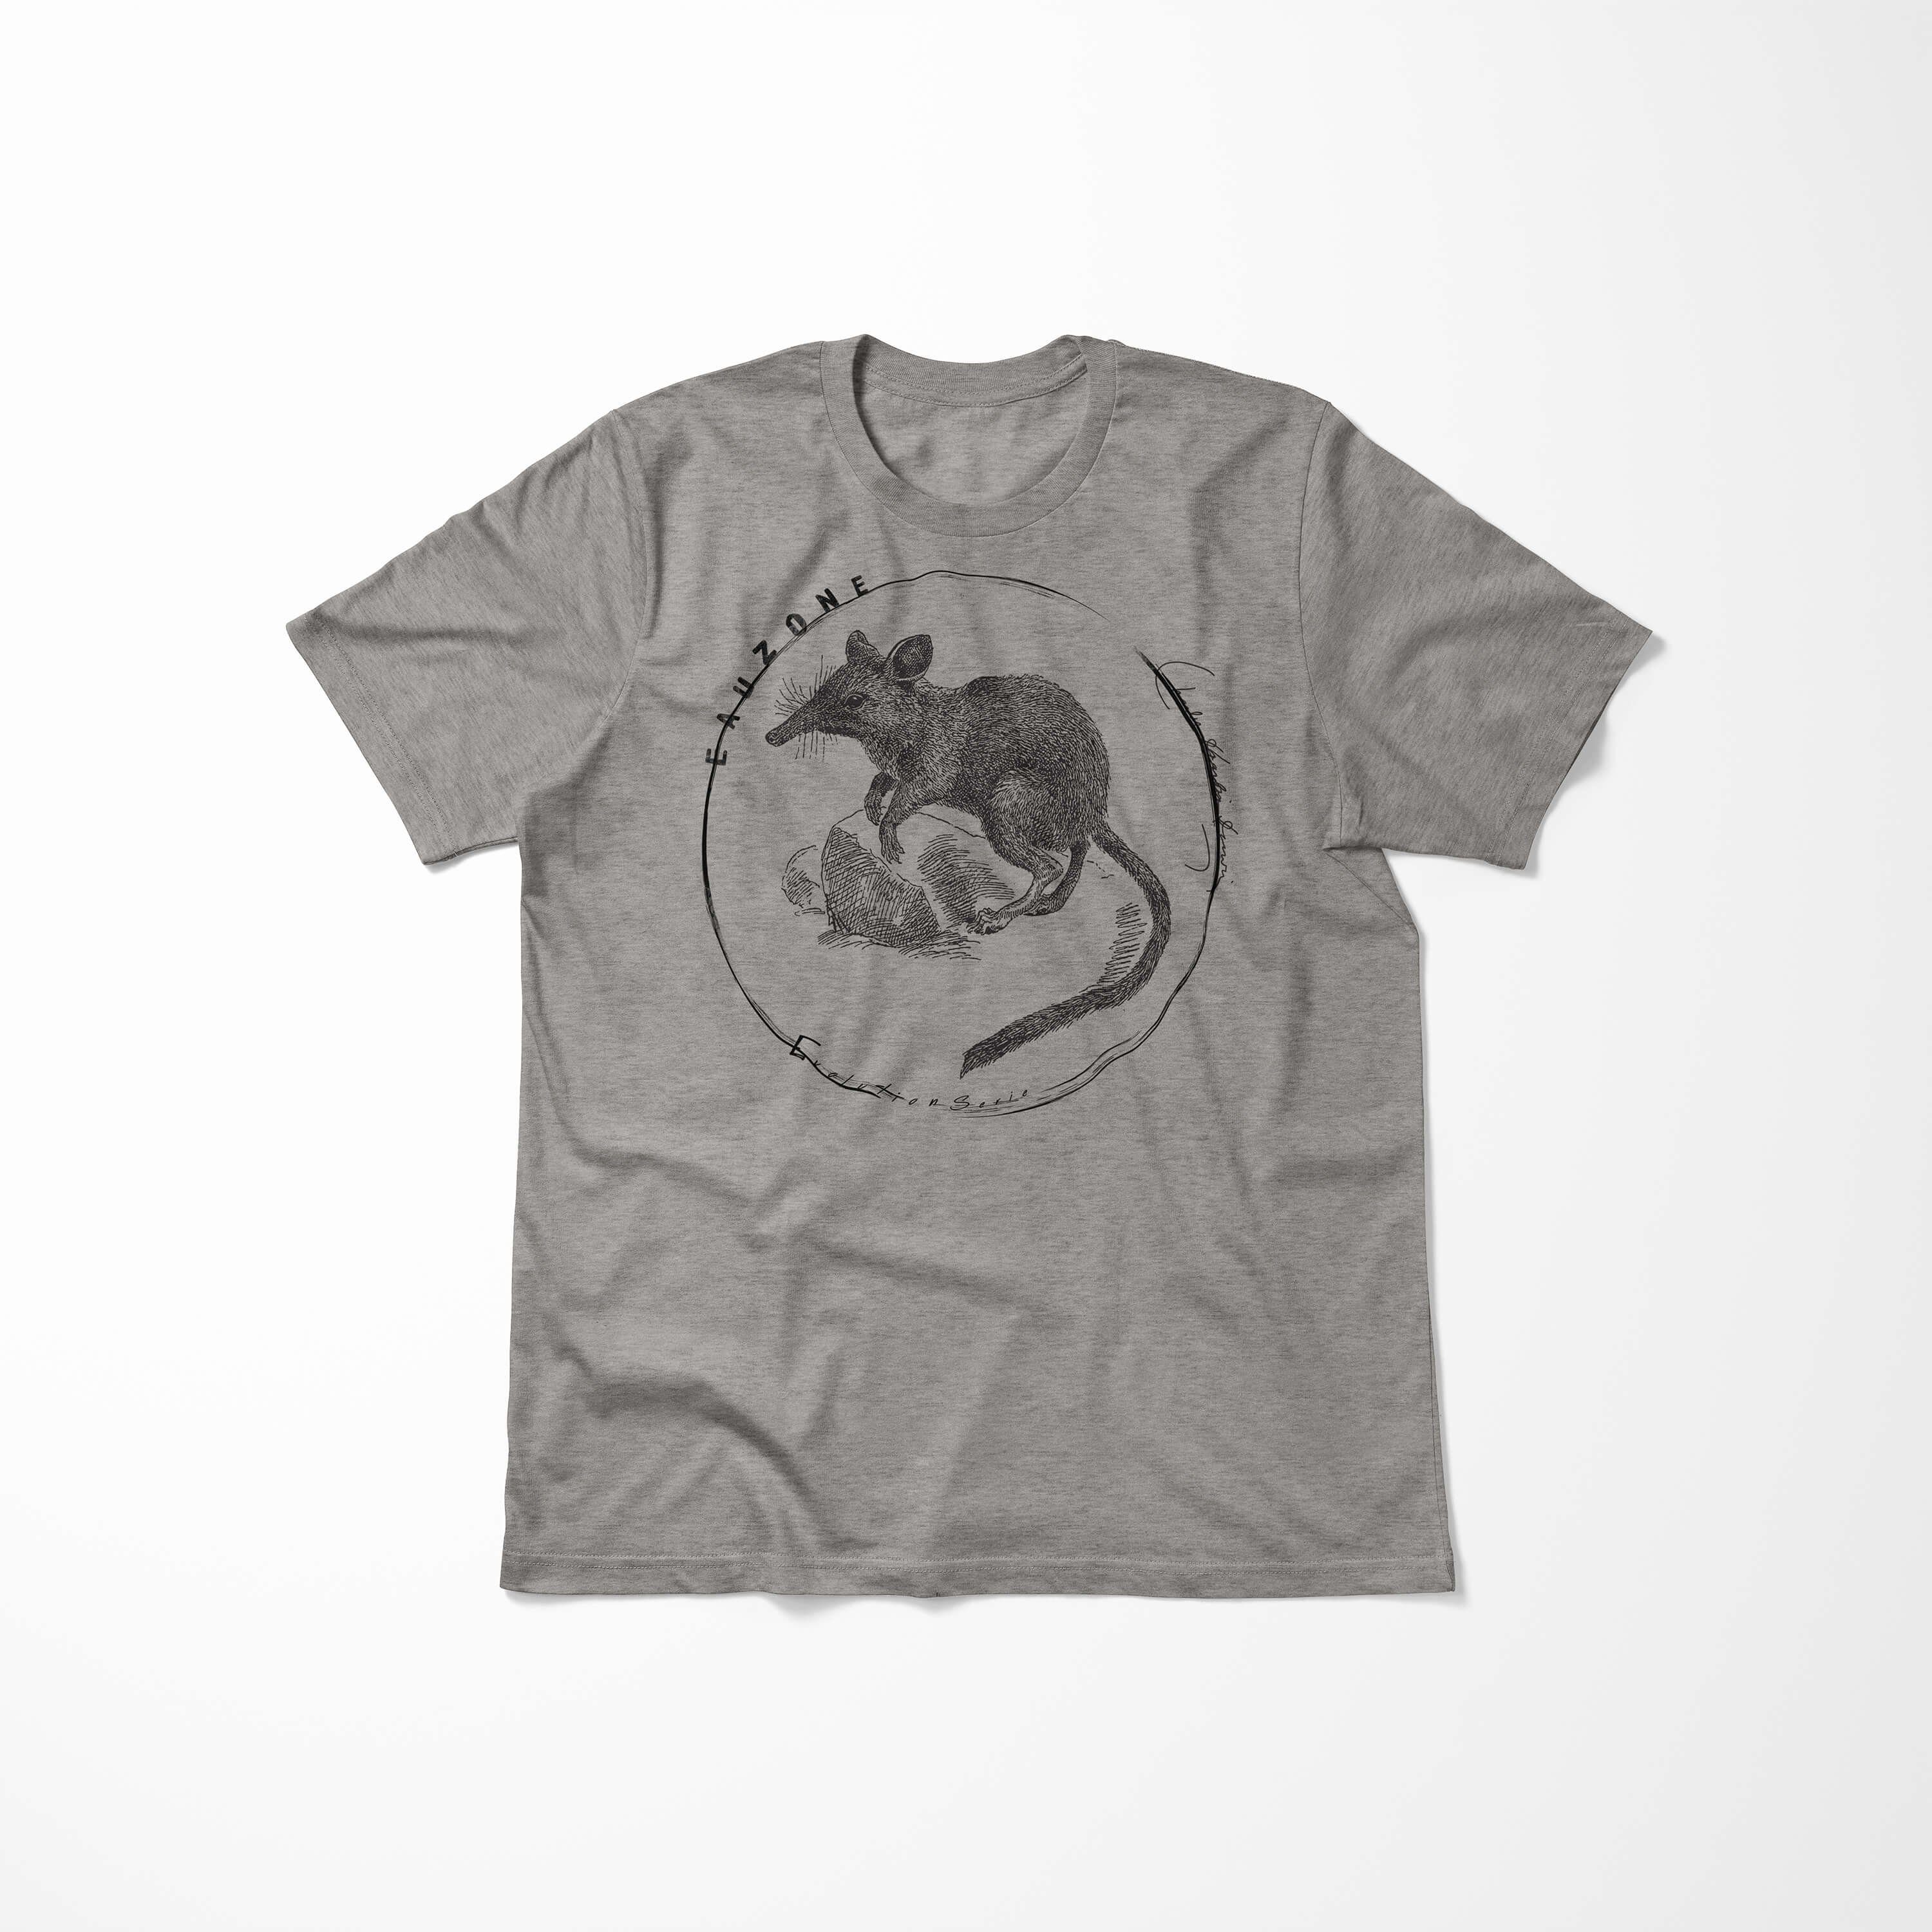 T-Shirt Sinus T-Shirt Springspitzmaus Art Herren Evolution Ash